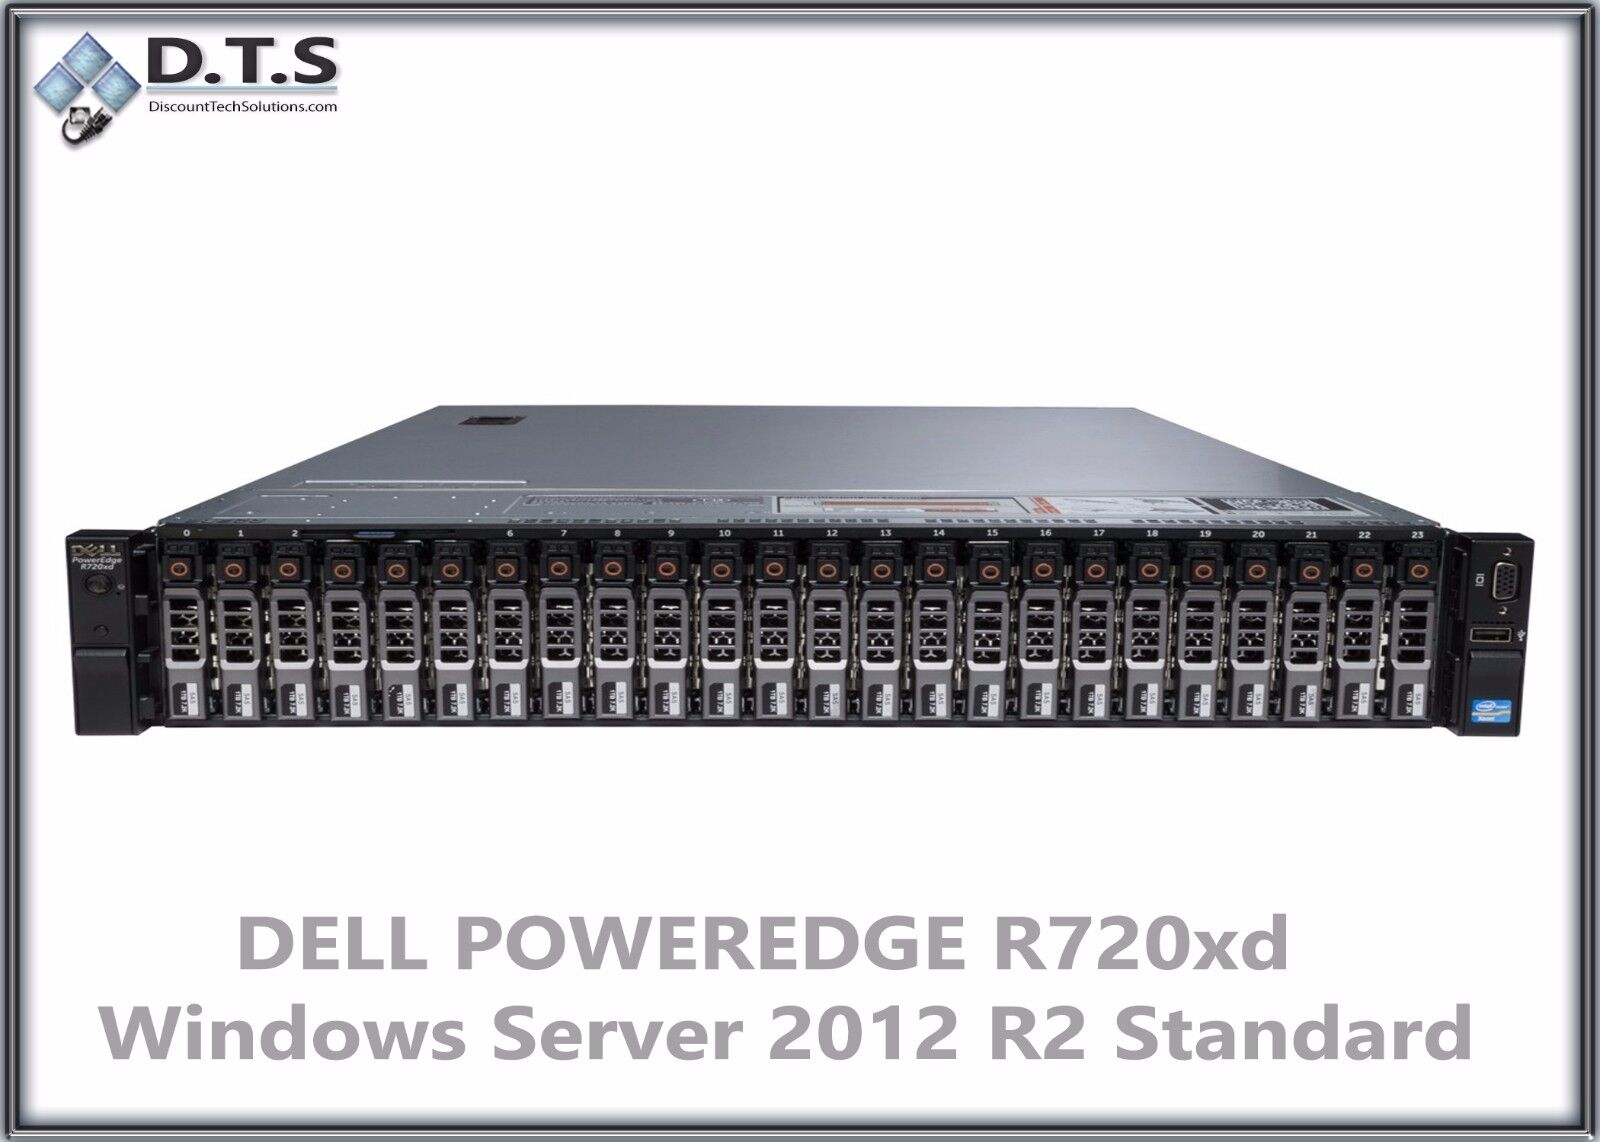 DELL POWEREDGE R720xd E5-2667 2.90Ghz H710 48Gb WINDOWS SERVER 2012 R2 STANDARD 